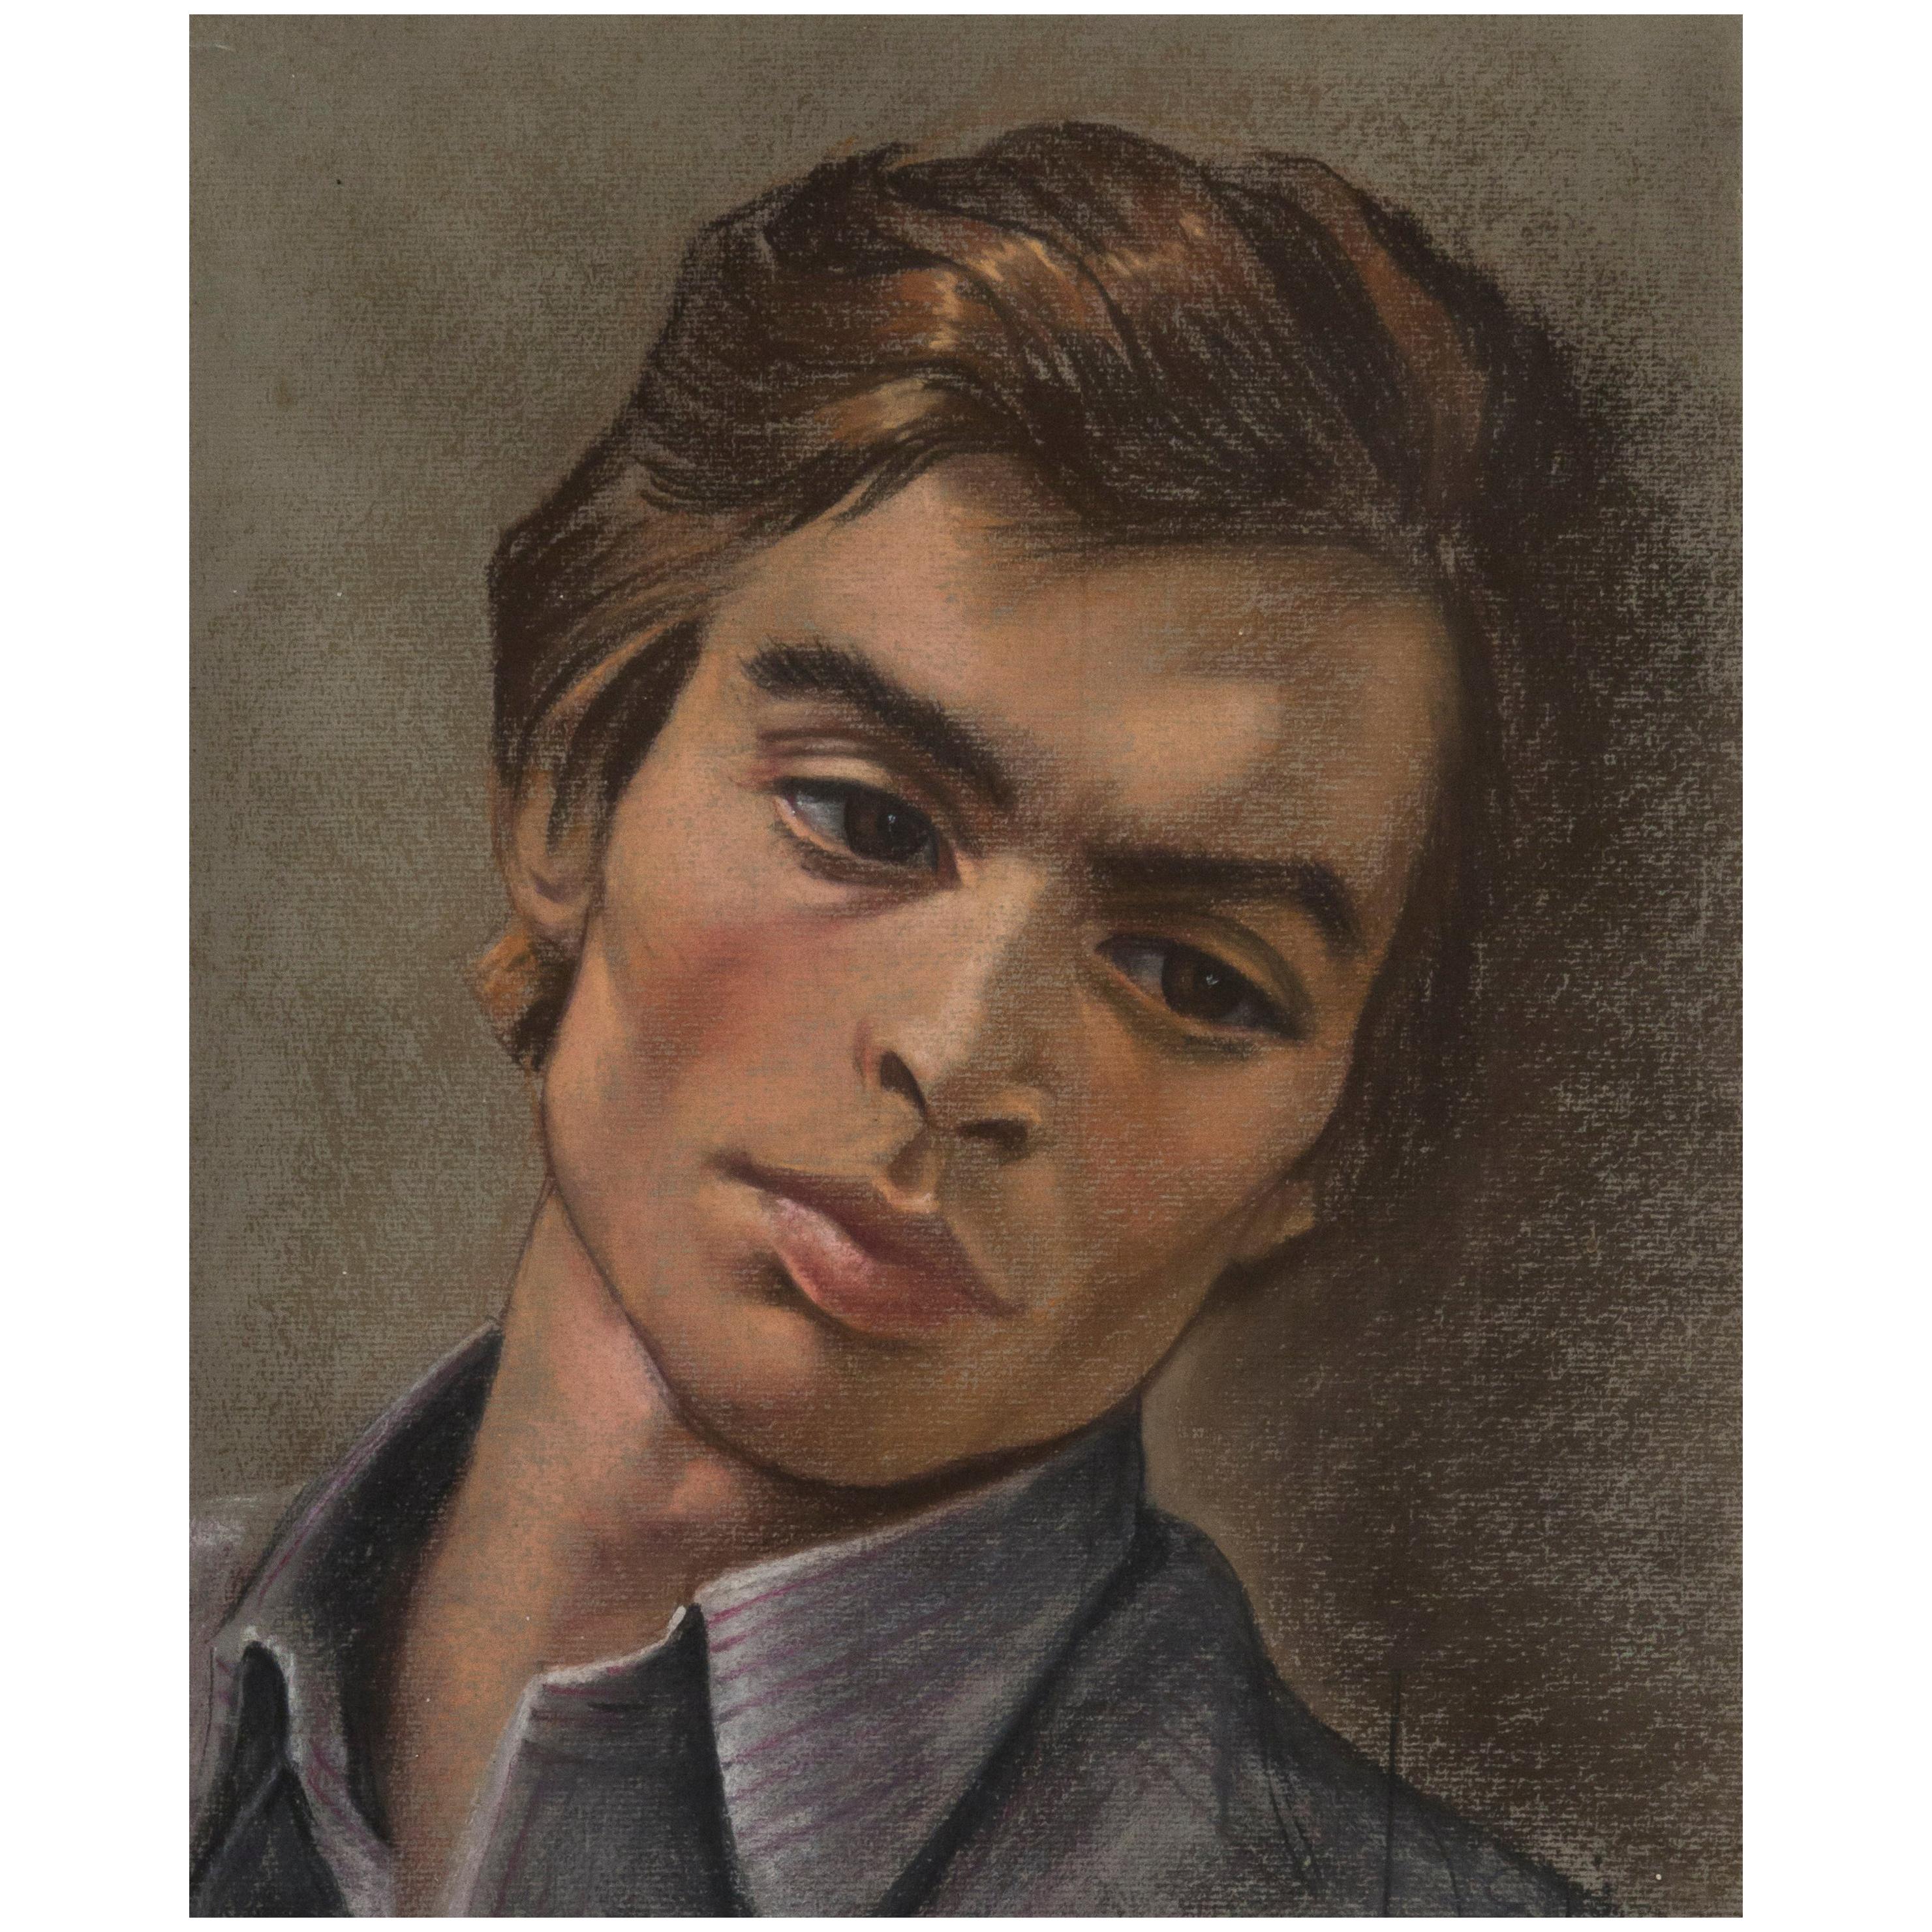 Rudolf Nureyev, portrait de 1965